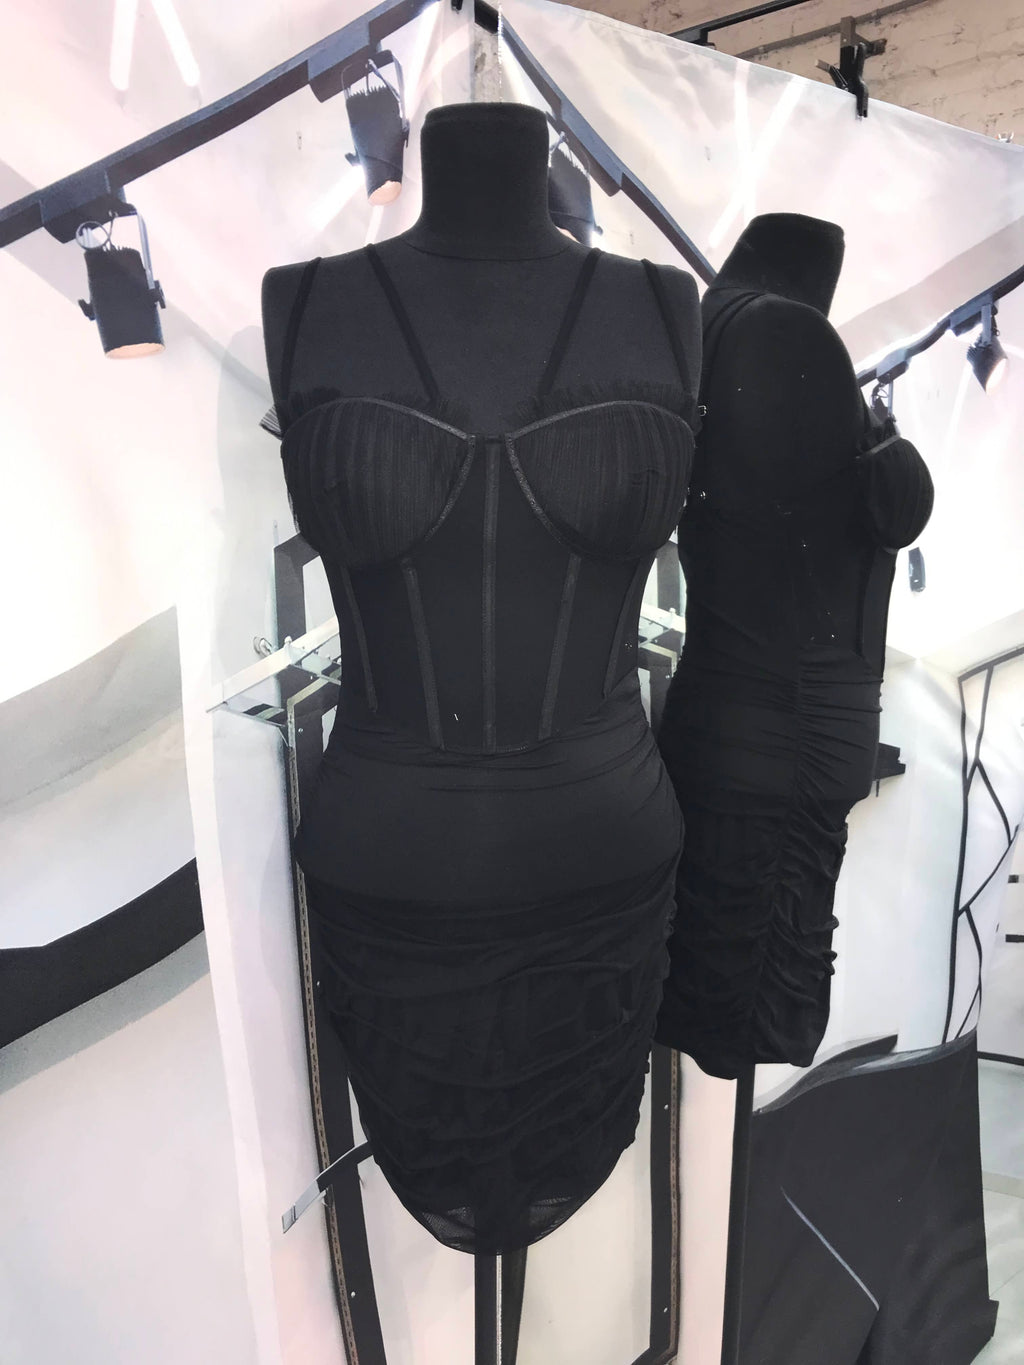 Vestido negro de tirantes corset simulado